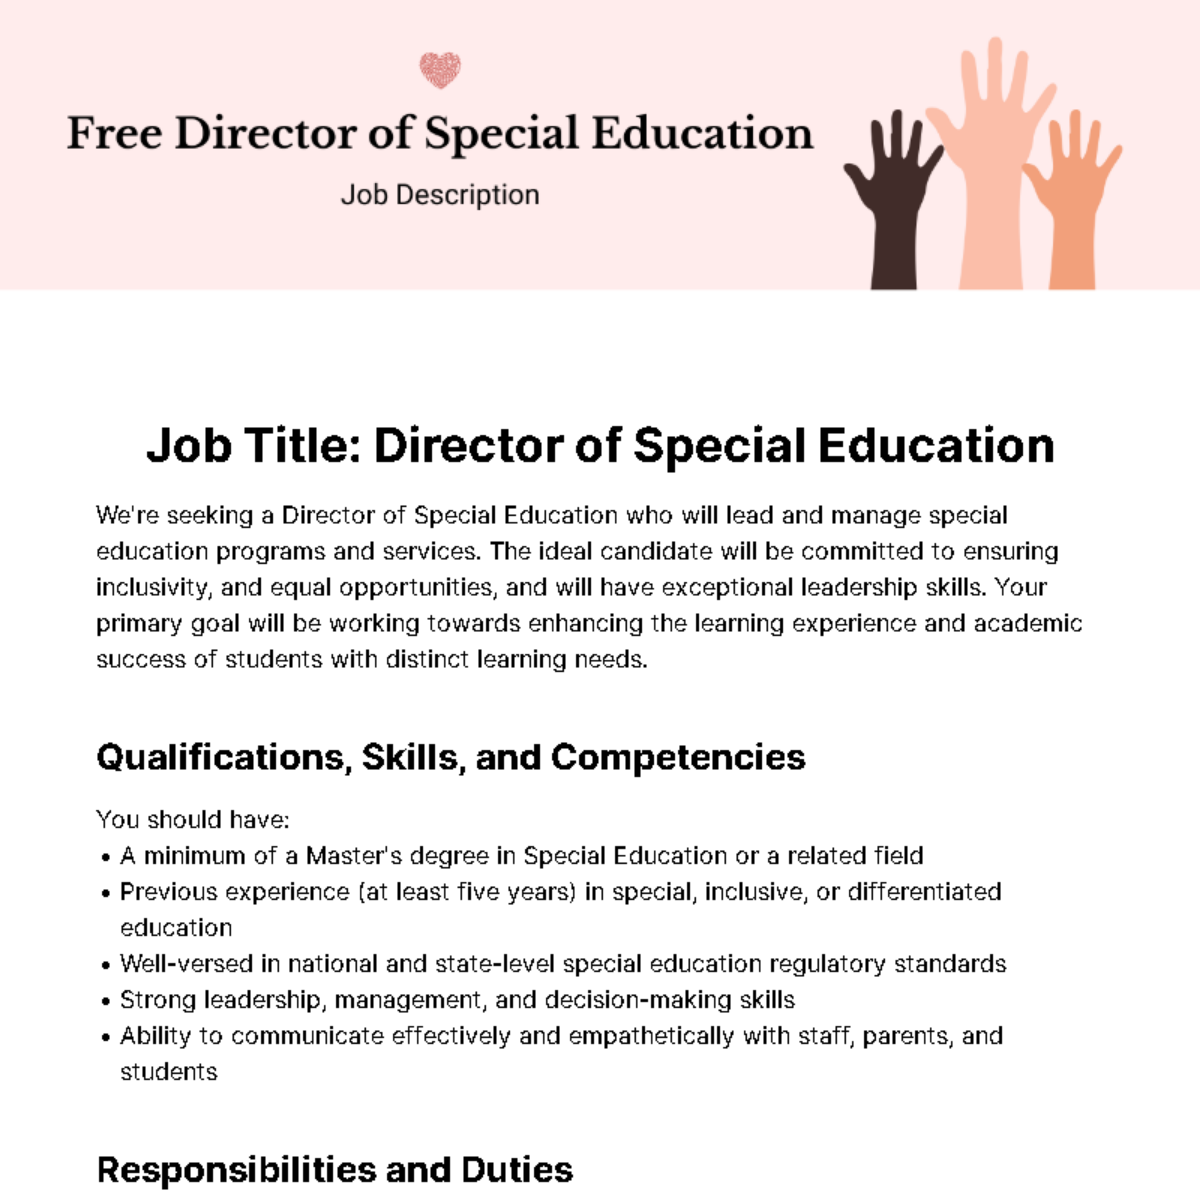 Free Director of Special Education Job Description Template